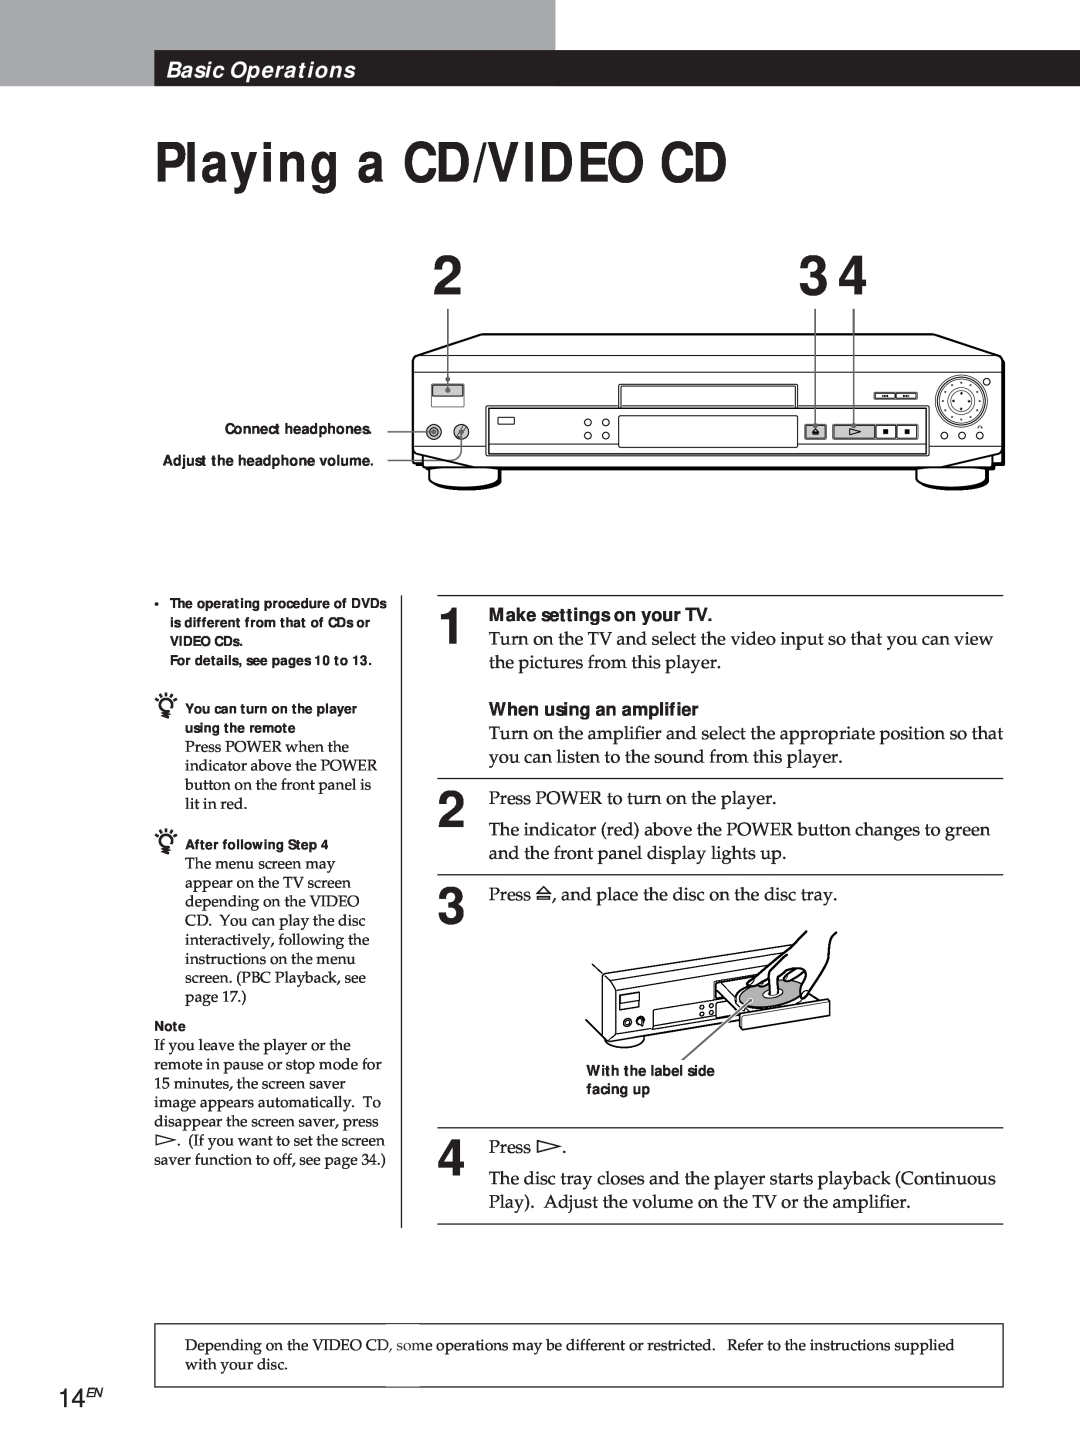 Sony DVP-S500D manual Playing a CD/VIDEO CD, 14EN, Basic Operations 